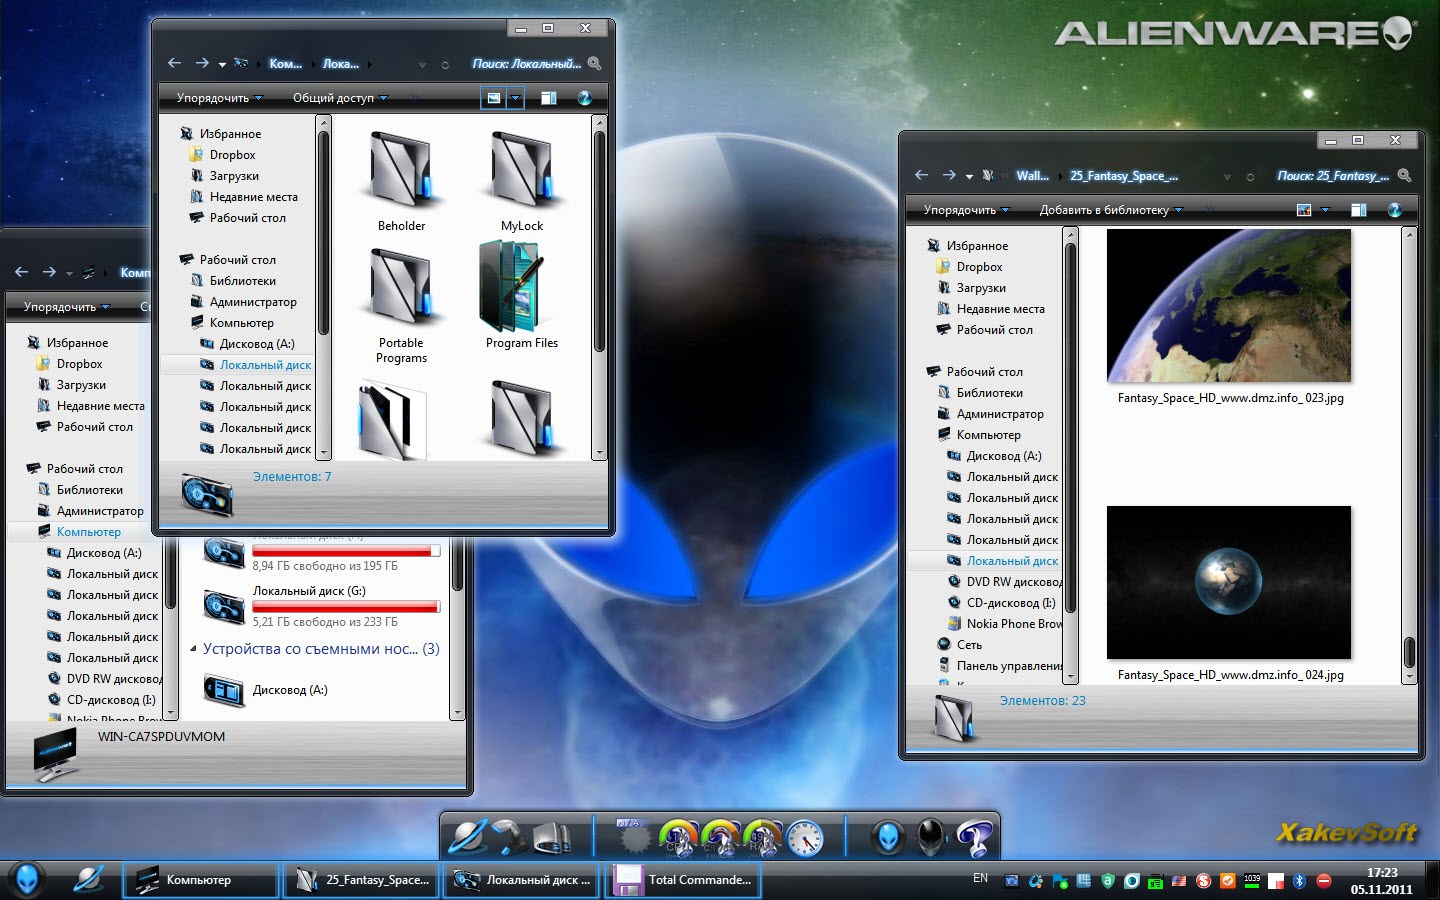 Alienware Skin Pack 1.0 for Windows 7 [x86/x64]